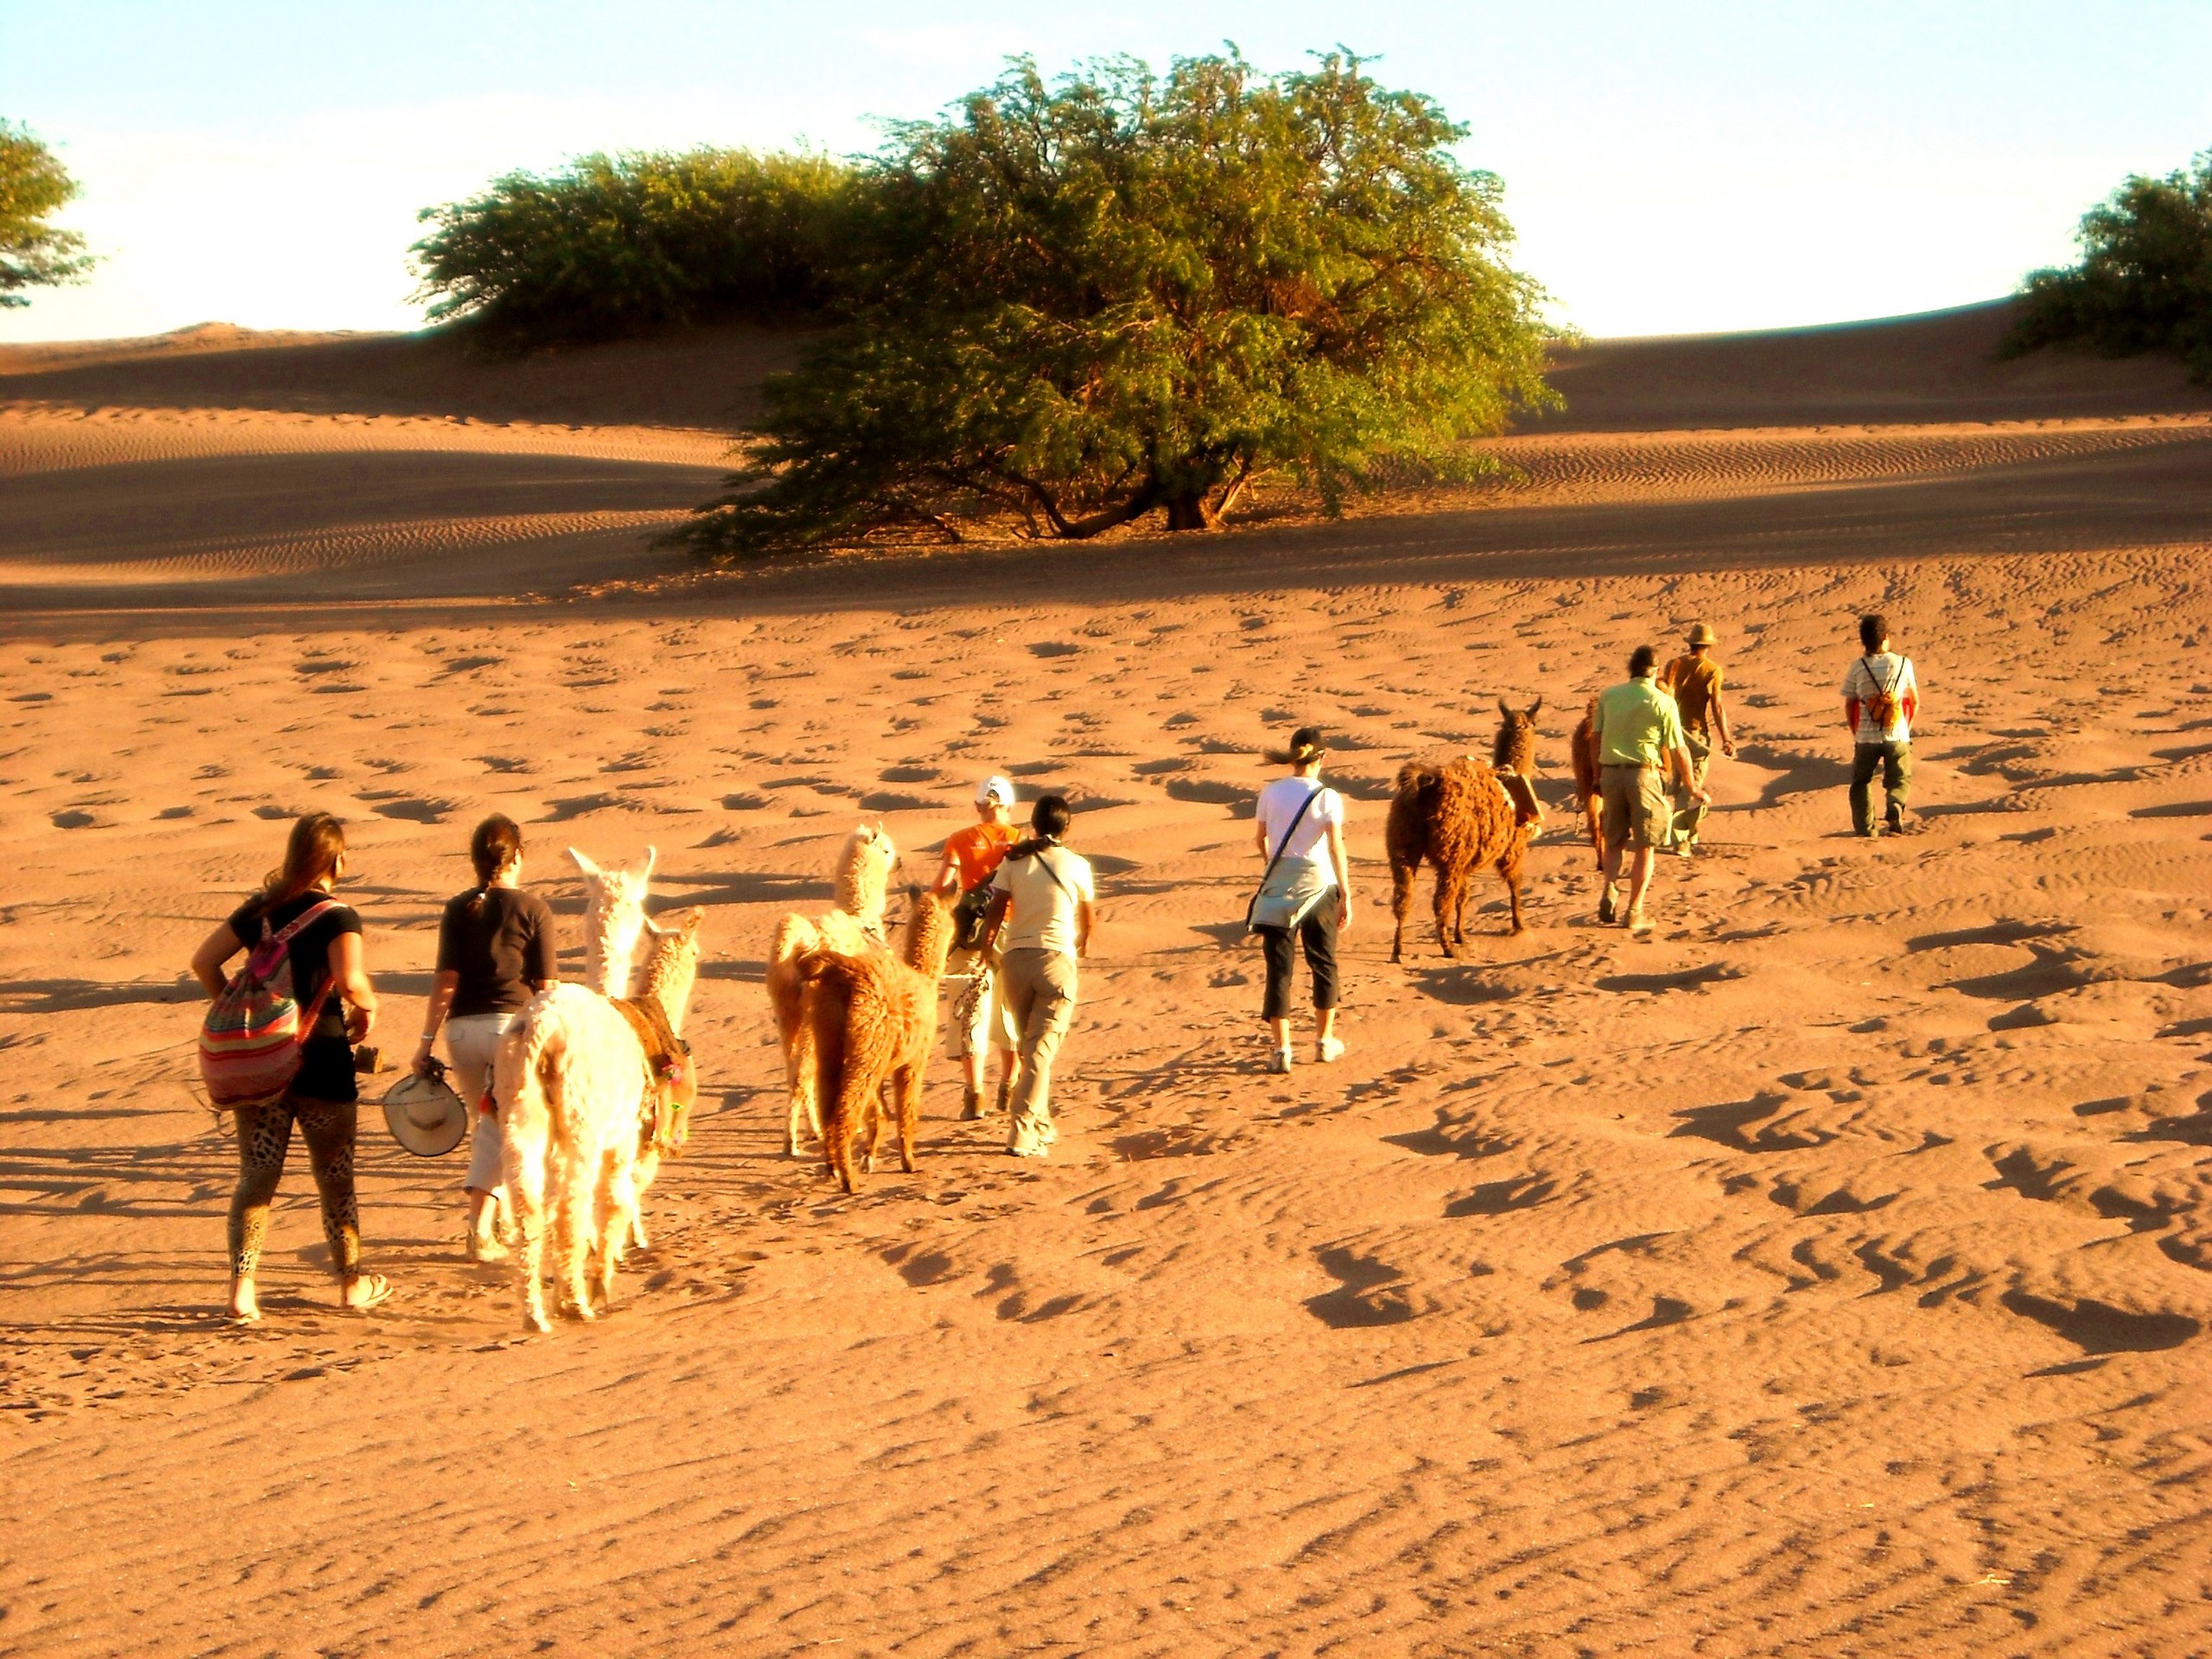 Walking with llamas in Atacama Desert